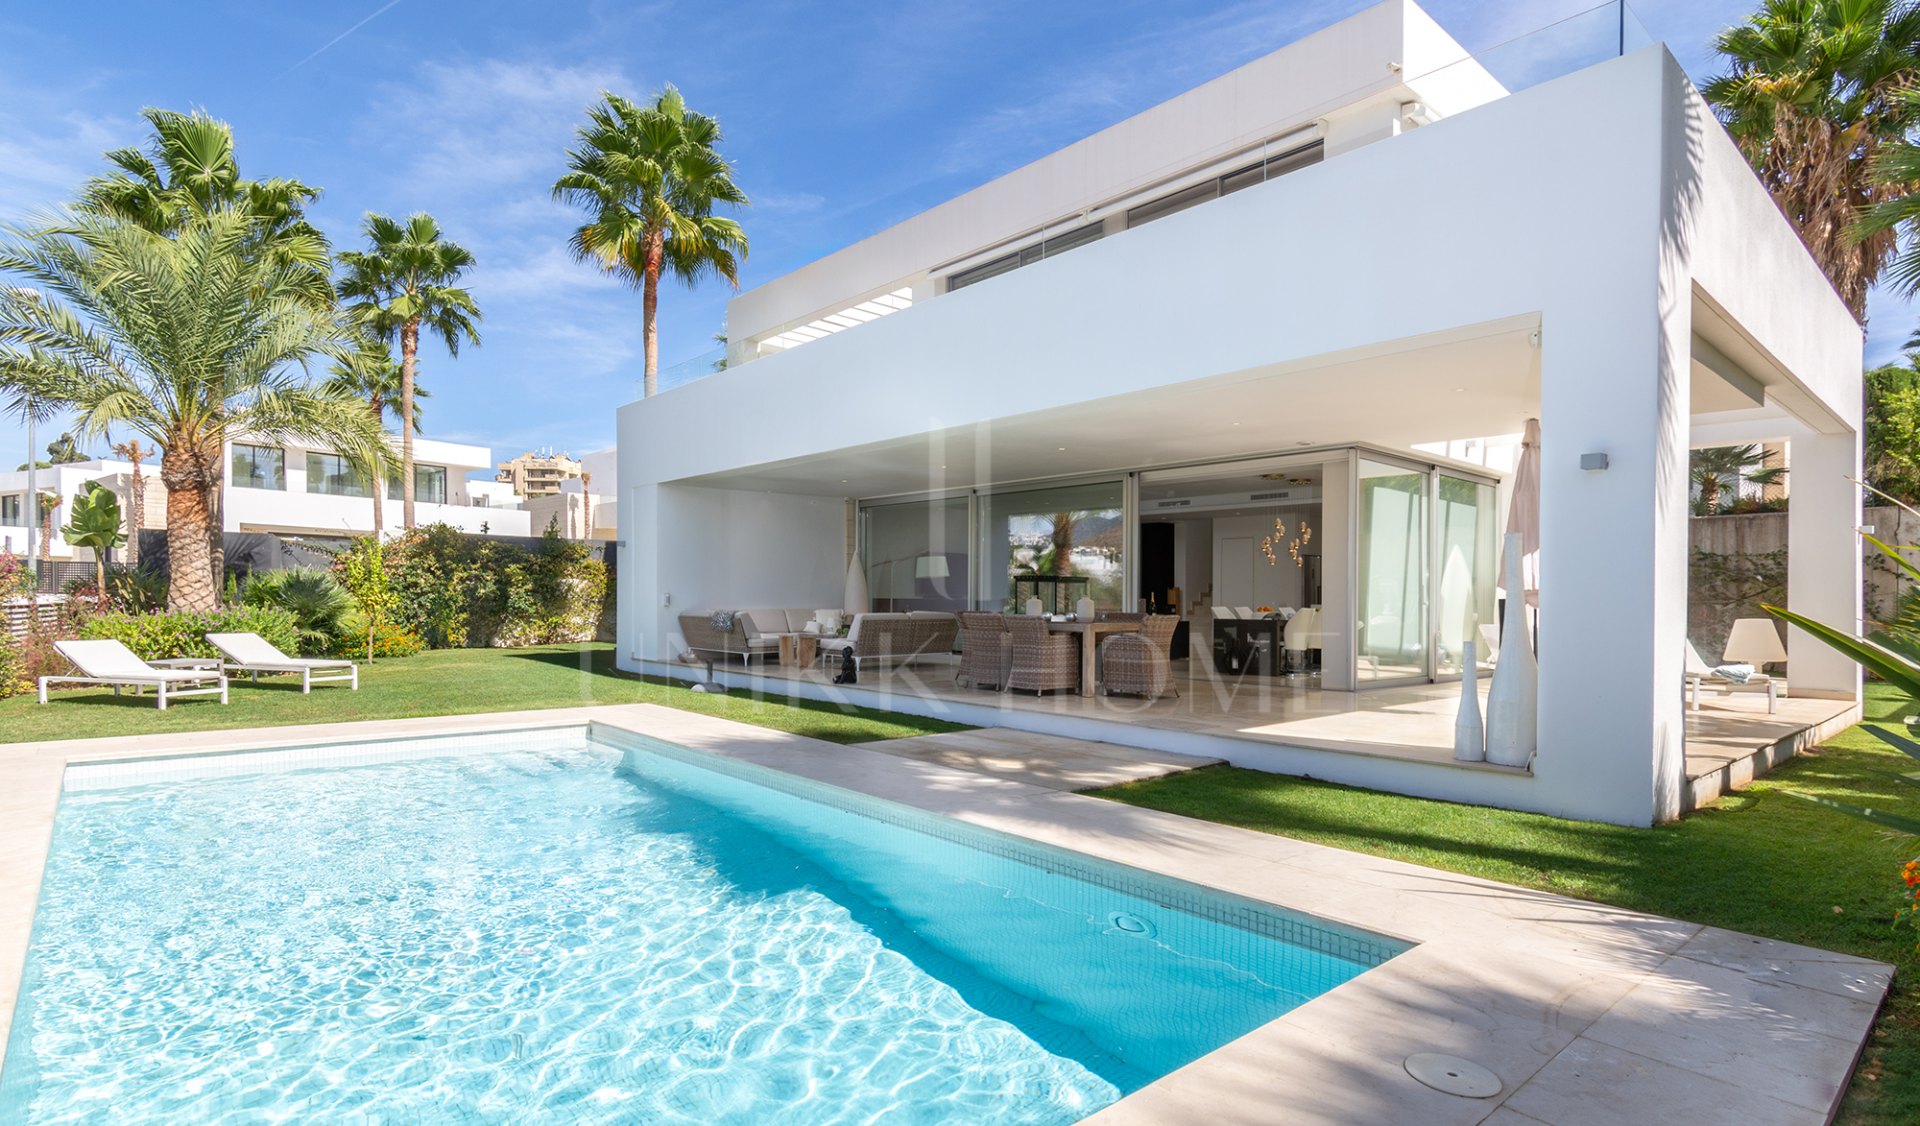 Stunning 3 bedroom villa in the iconic Rio Real, Marbella